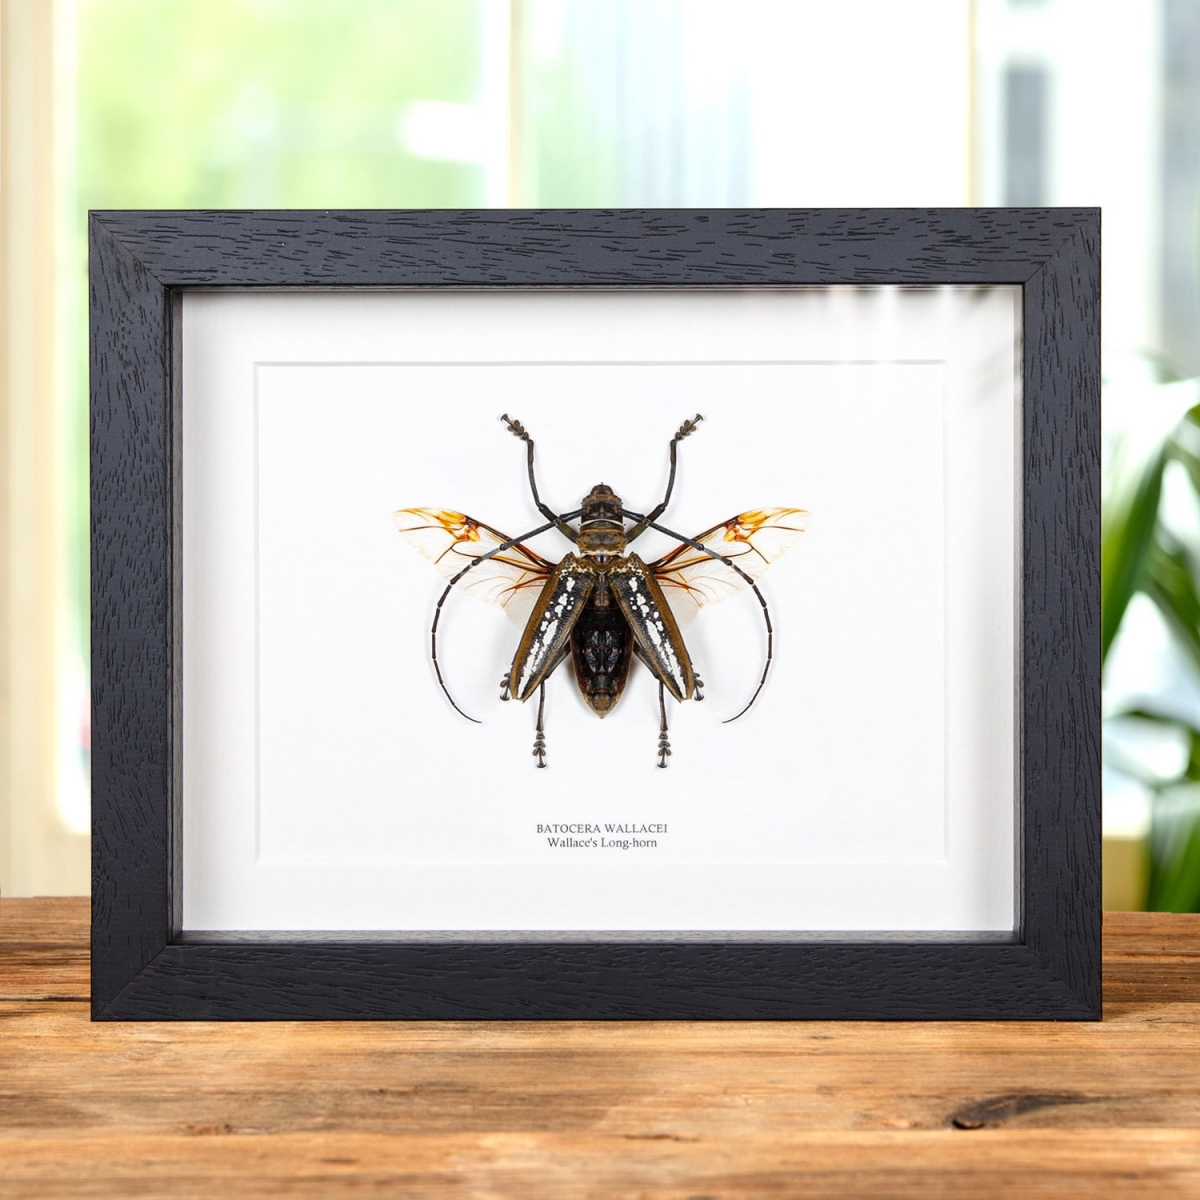 Minibeast Wallace's Long-horn Beetle With Wings Spread in Box Frame (Batocera wallacei)